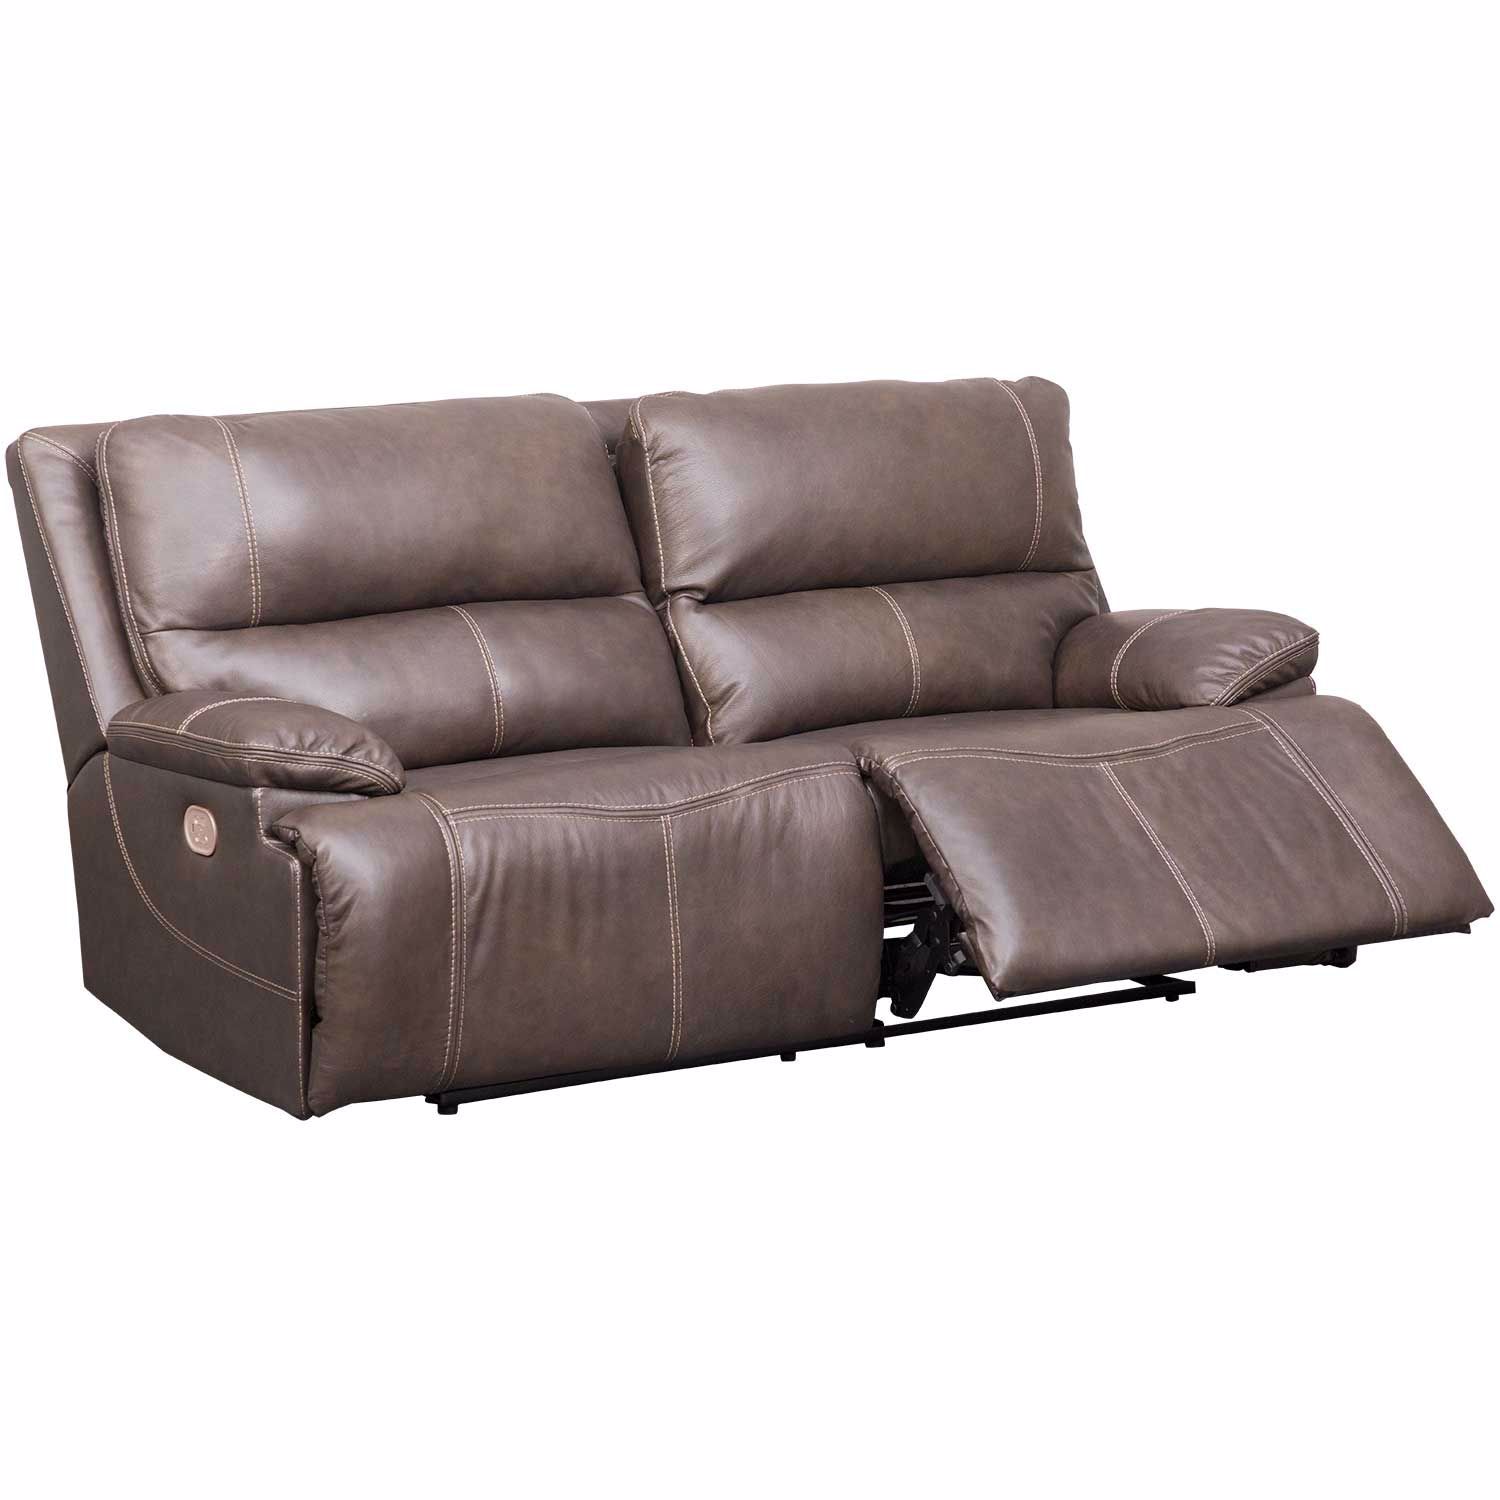 Ricmen Walnut Italian Leather Power Reclining Sofa with